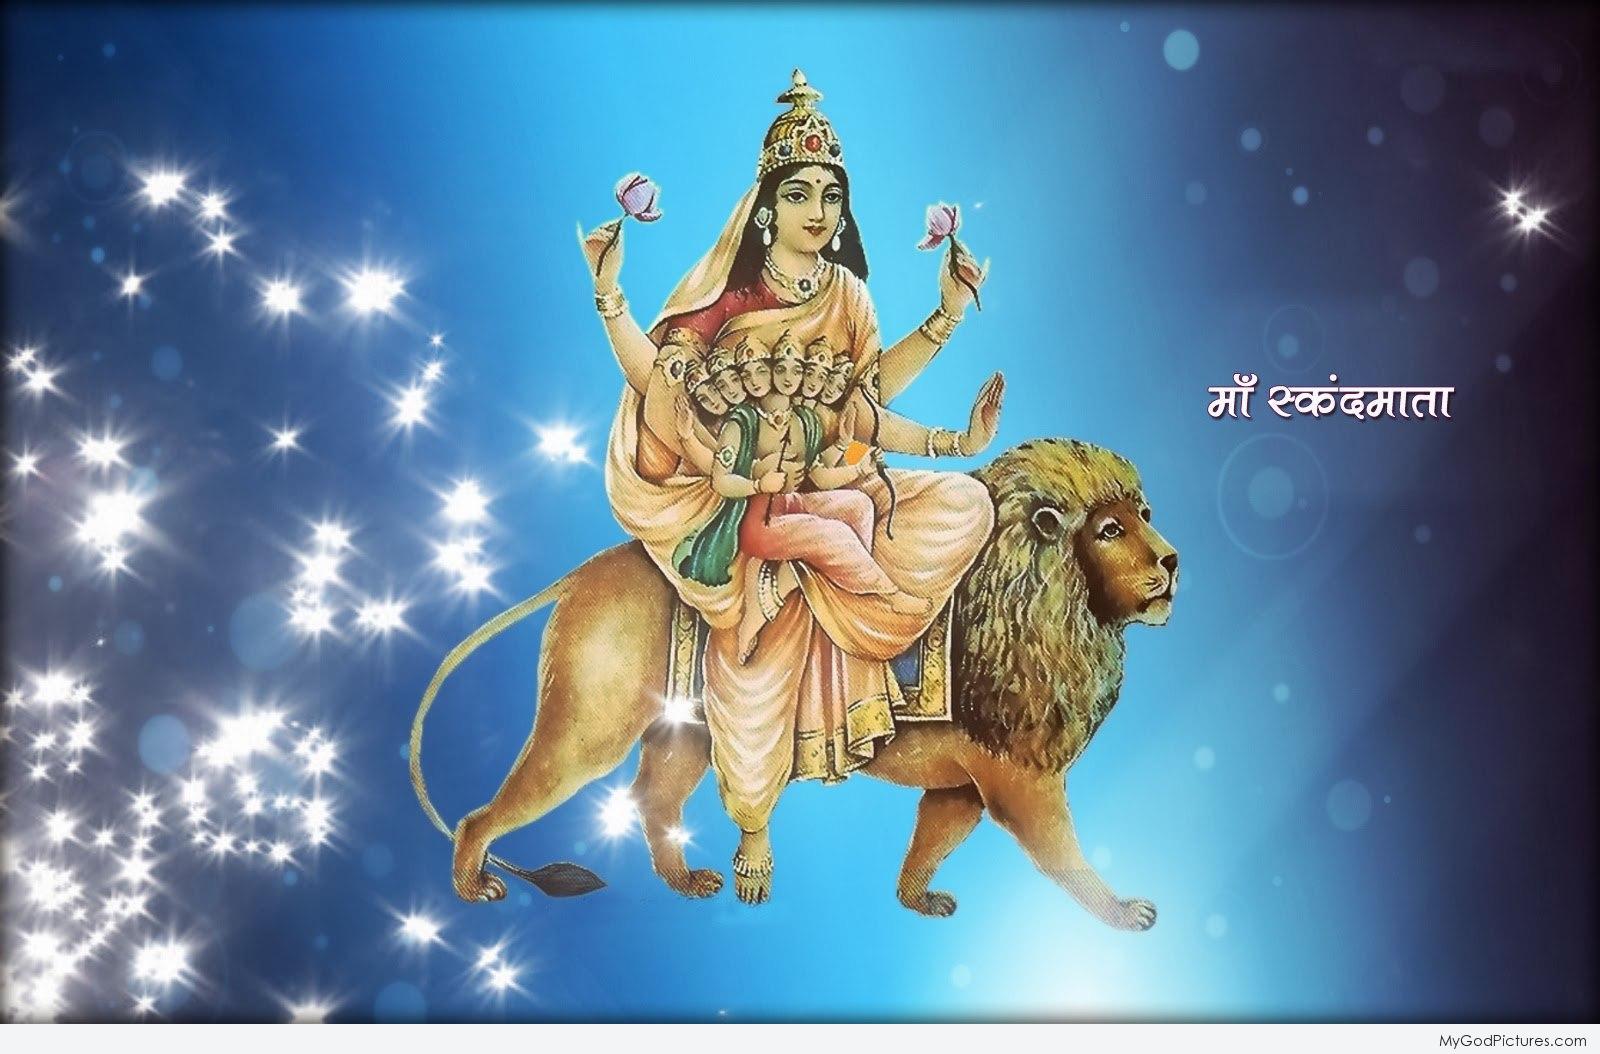 Goddess Skandmata Ji – Maa Durga Fifth Avatar